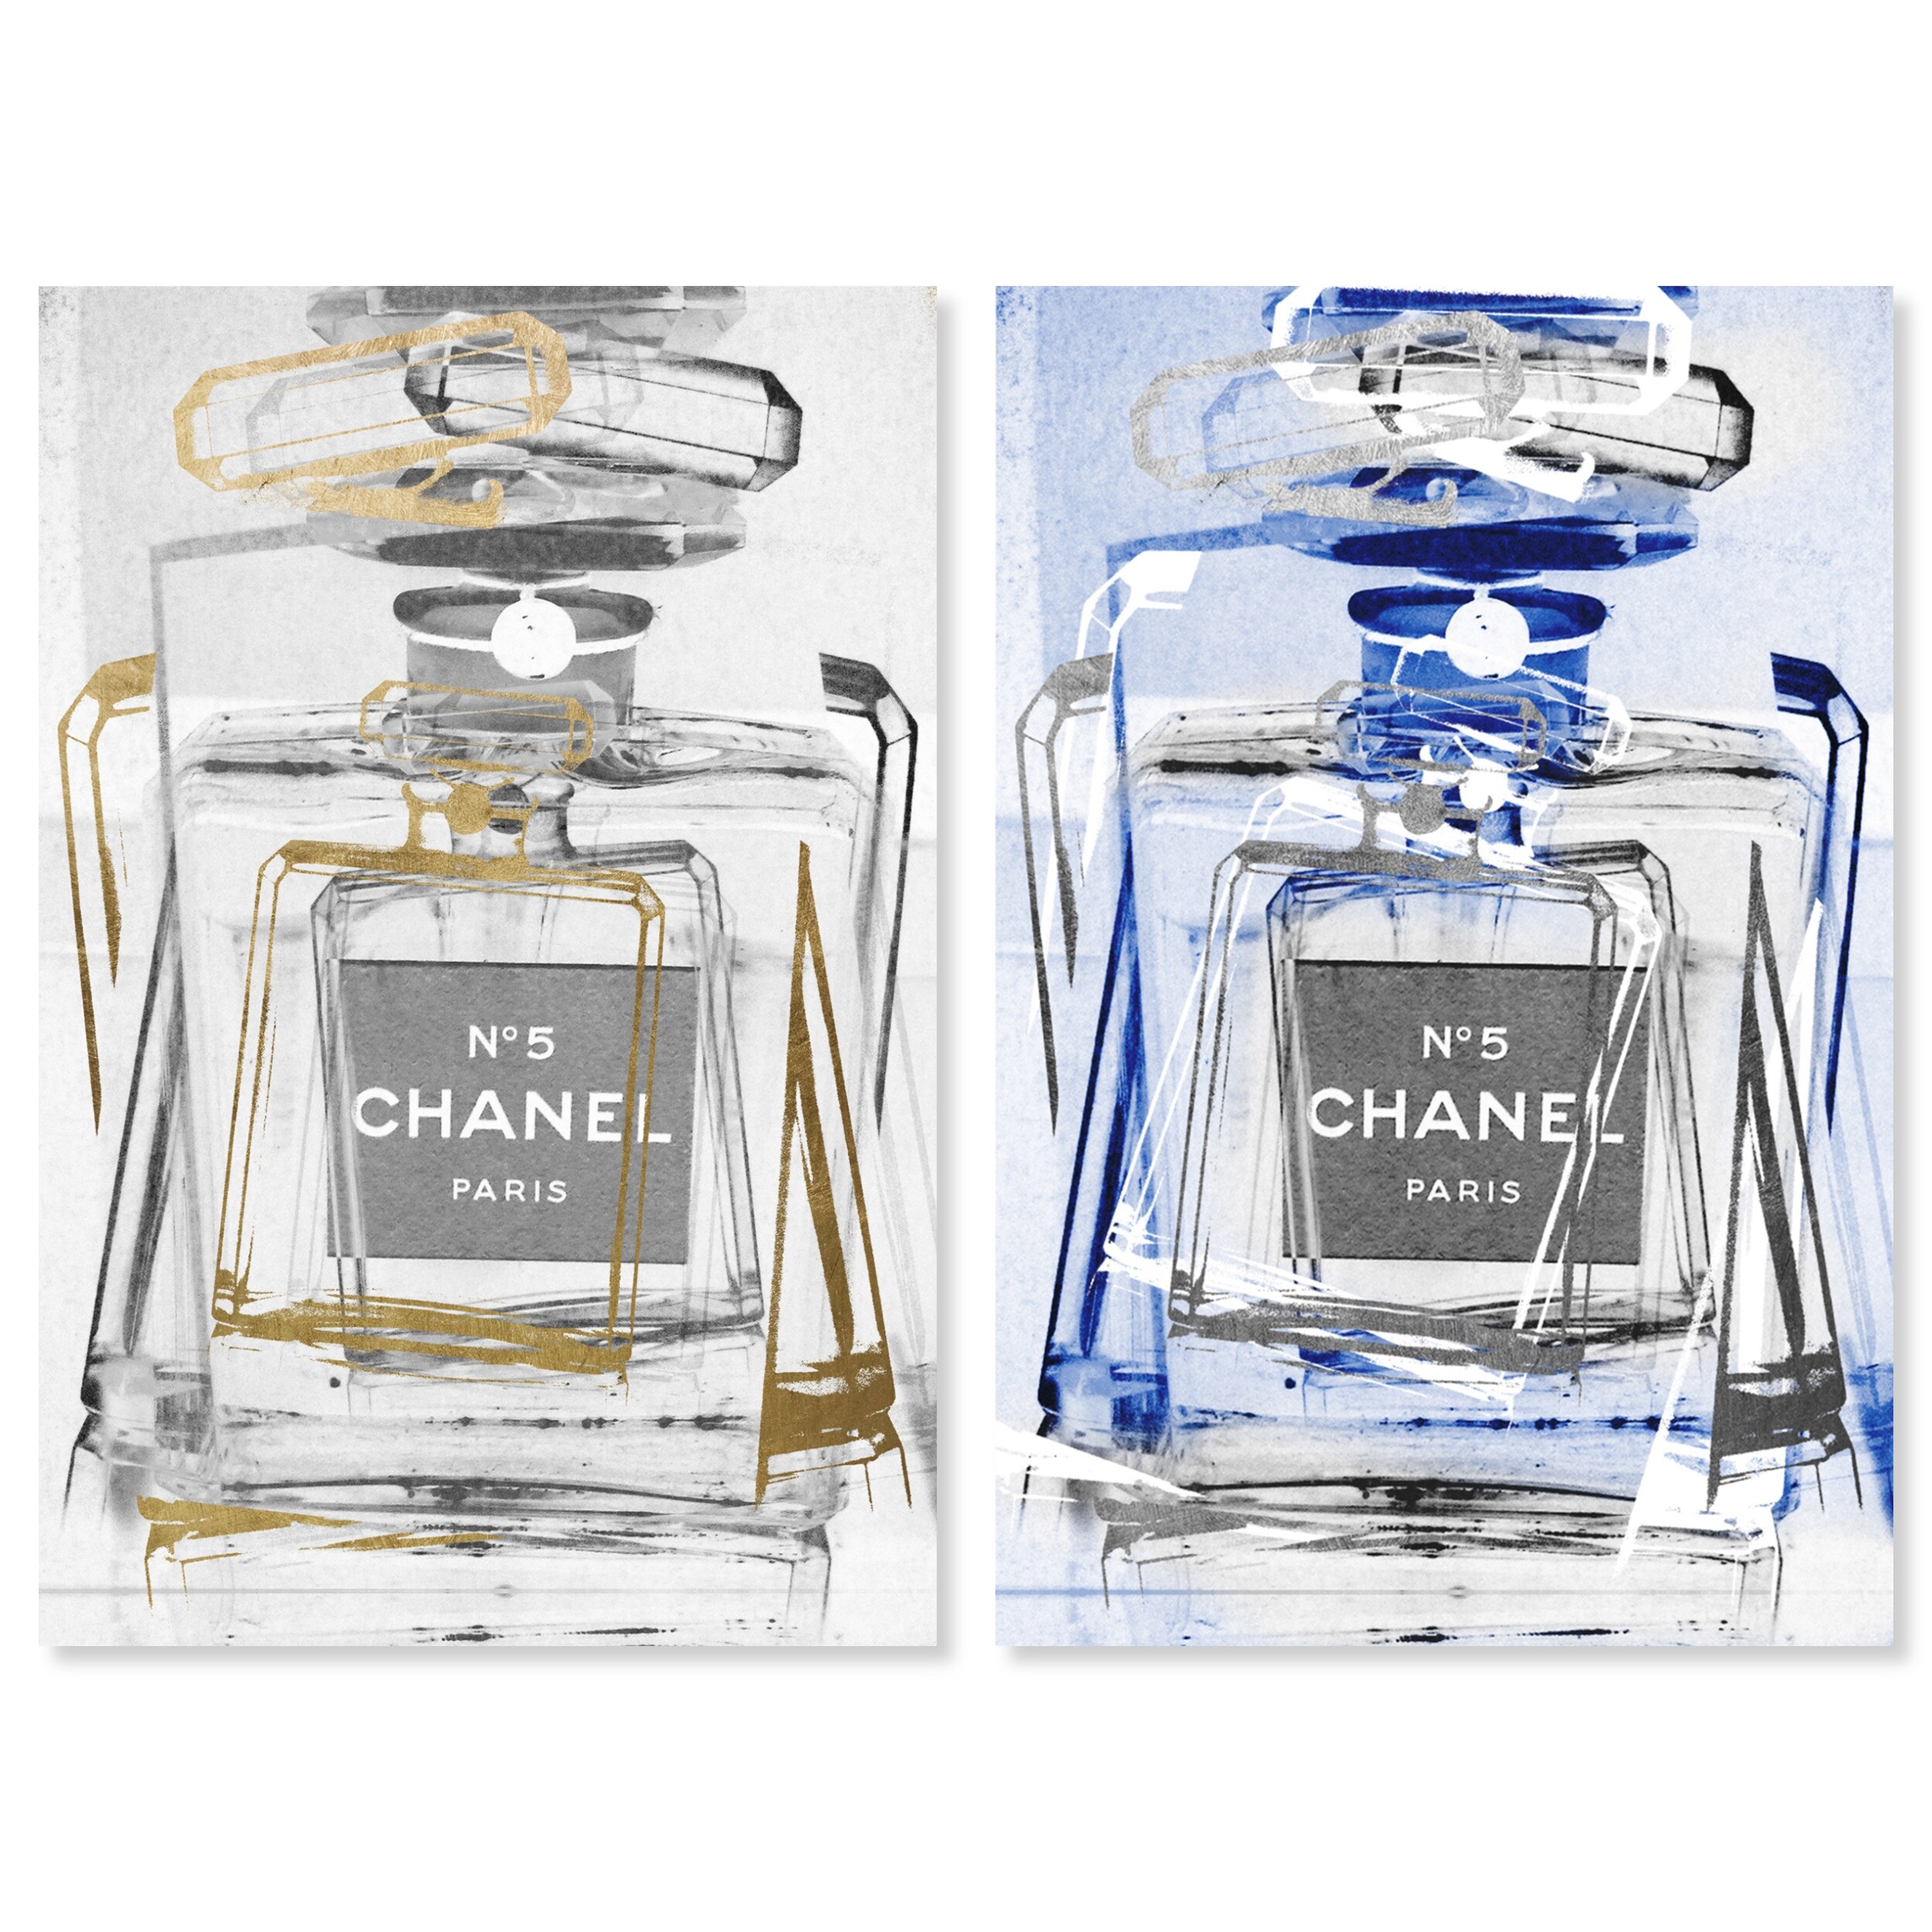 Fashion and Glam 'Perfume Shades' Perfumes by Oliver Gal Wall Art Print